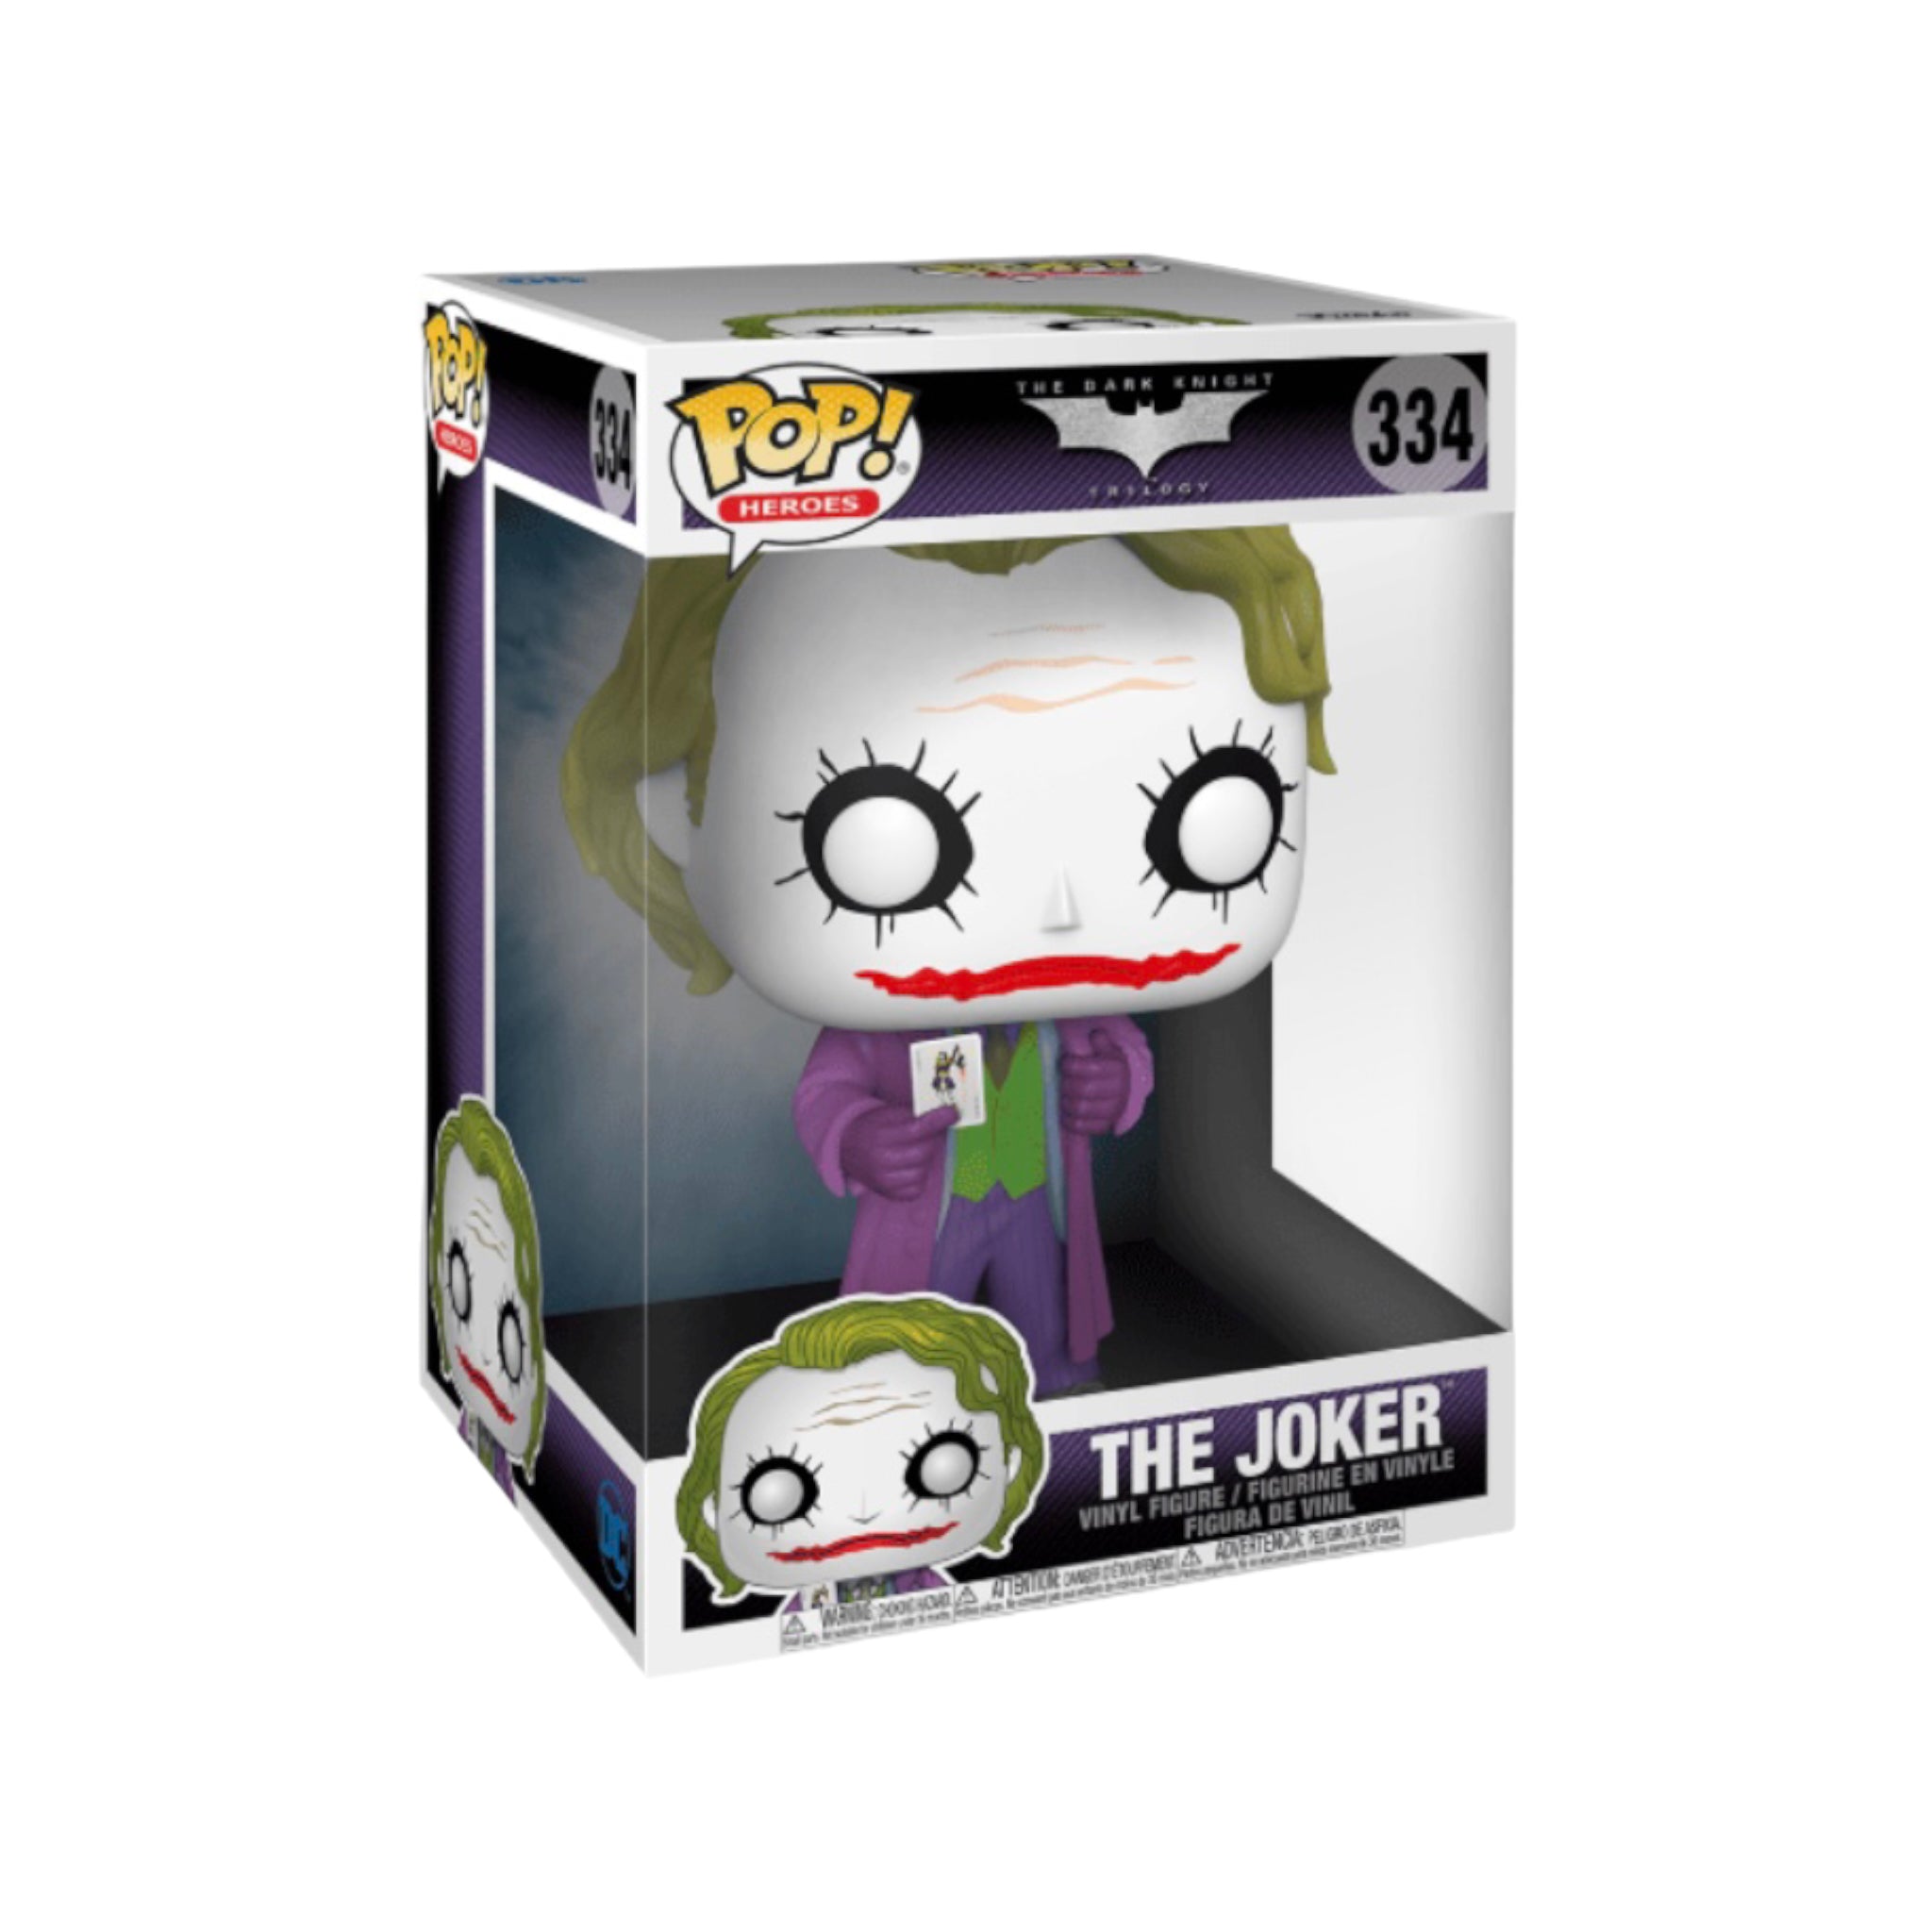 The Joker #334 10" Funko Pop! - The Dark Knight - Condition 8.5/10